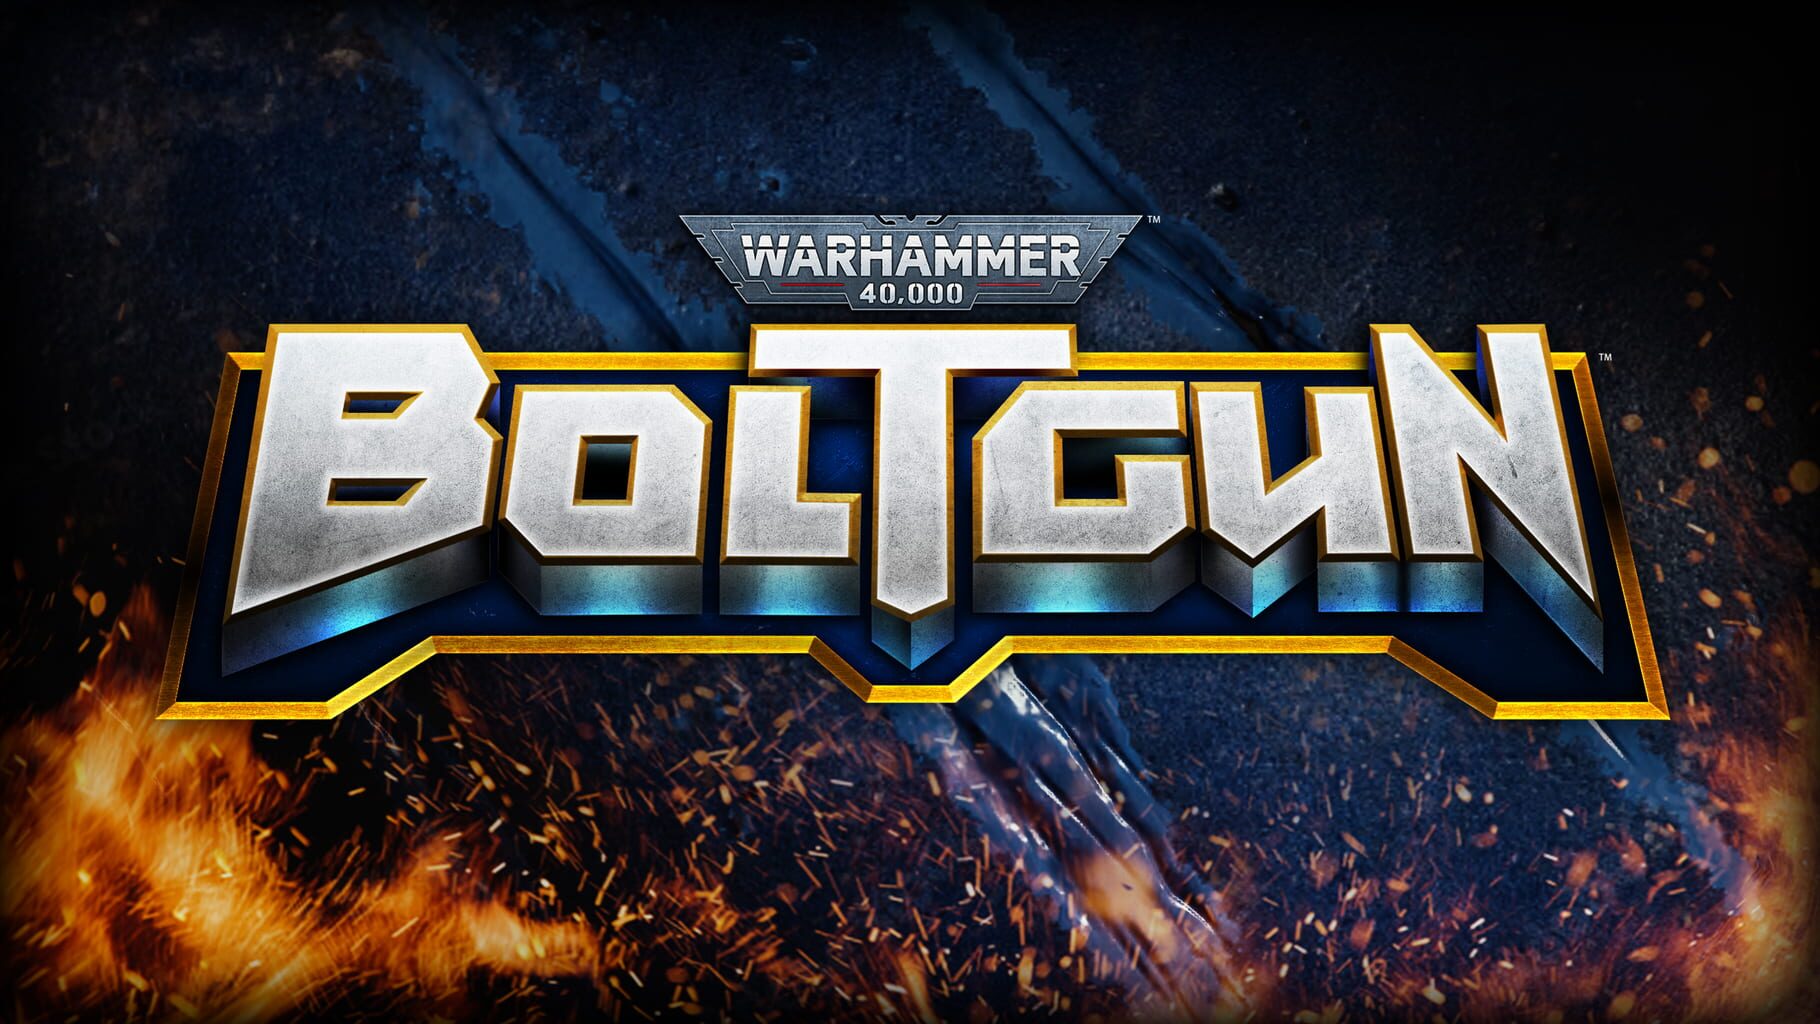 Arte - Warhammer 40,000: Boltgun